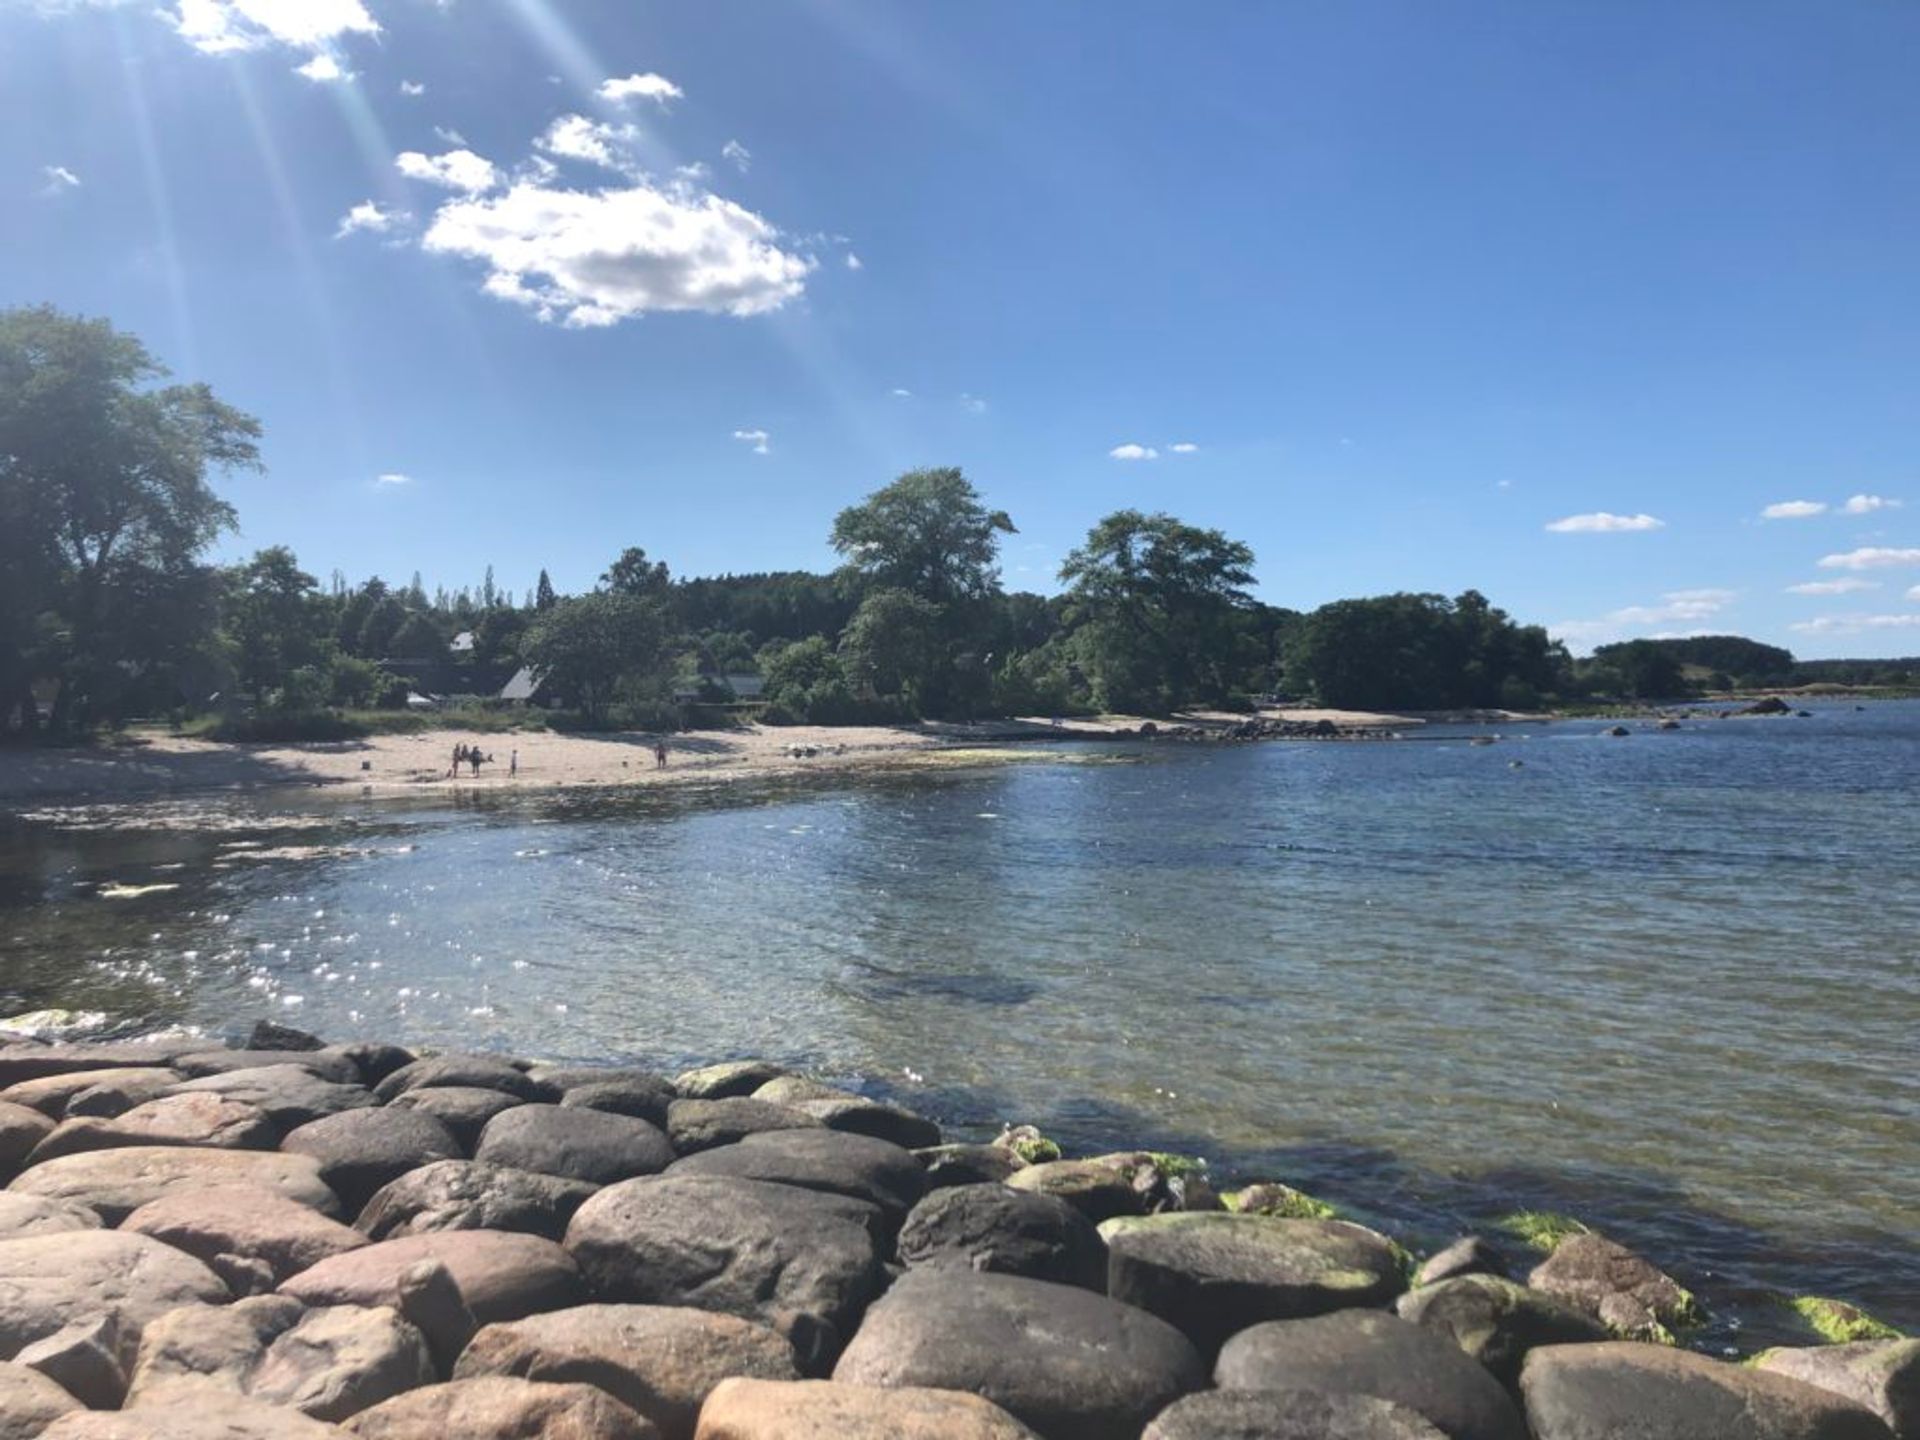 Österlen, southern Sweden, June 2019